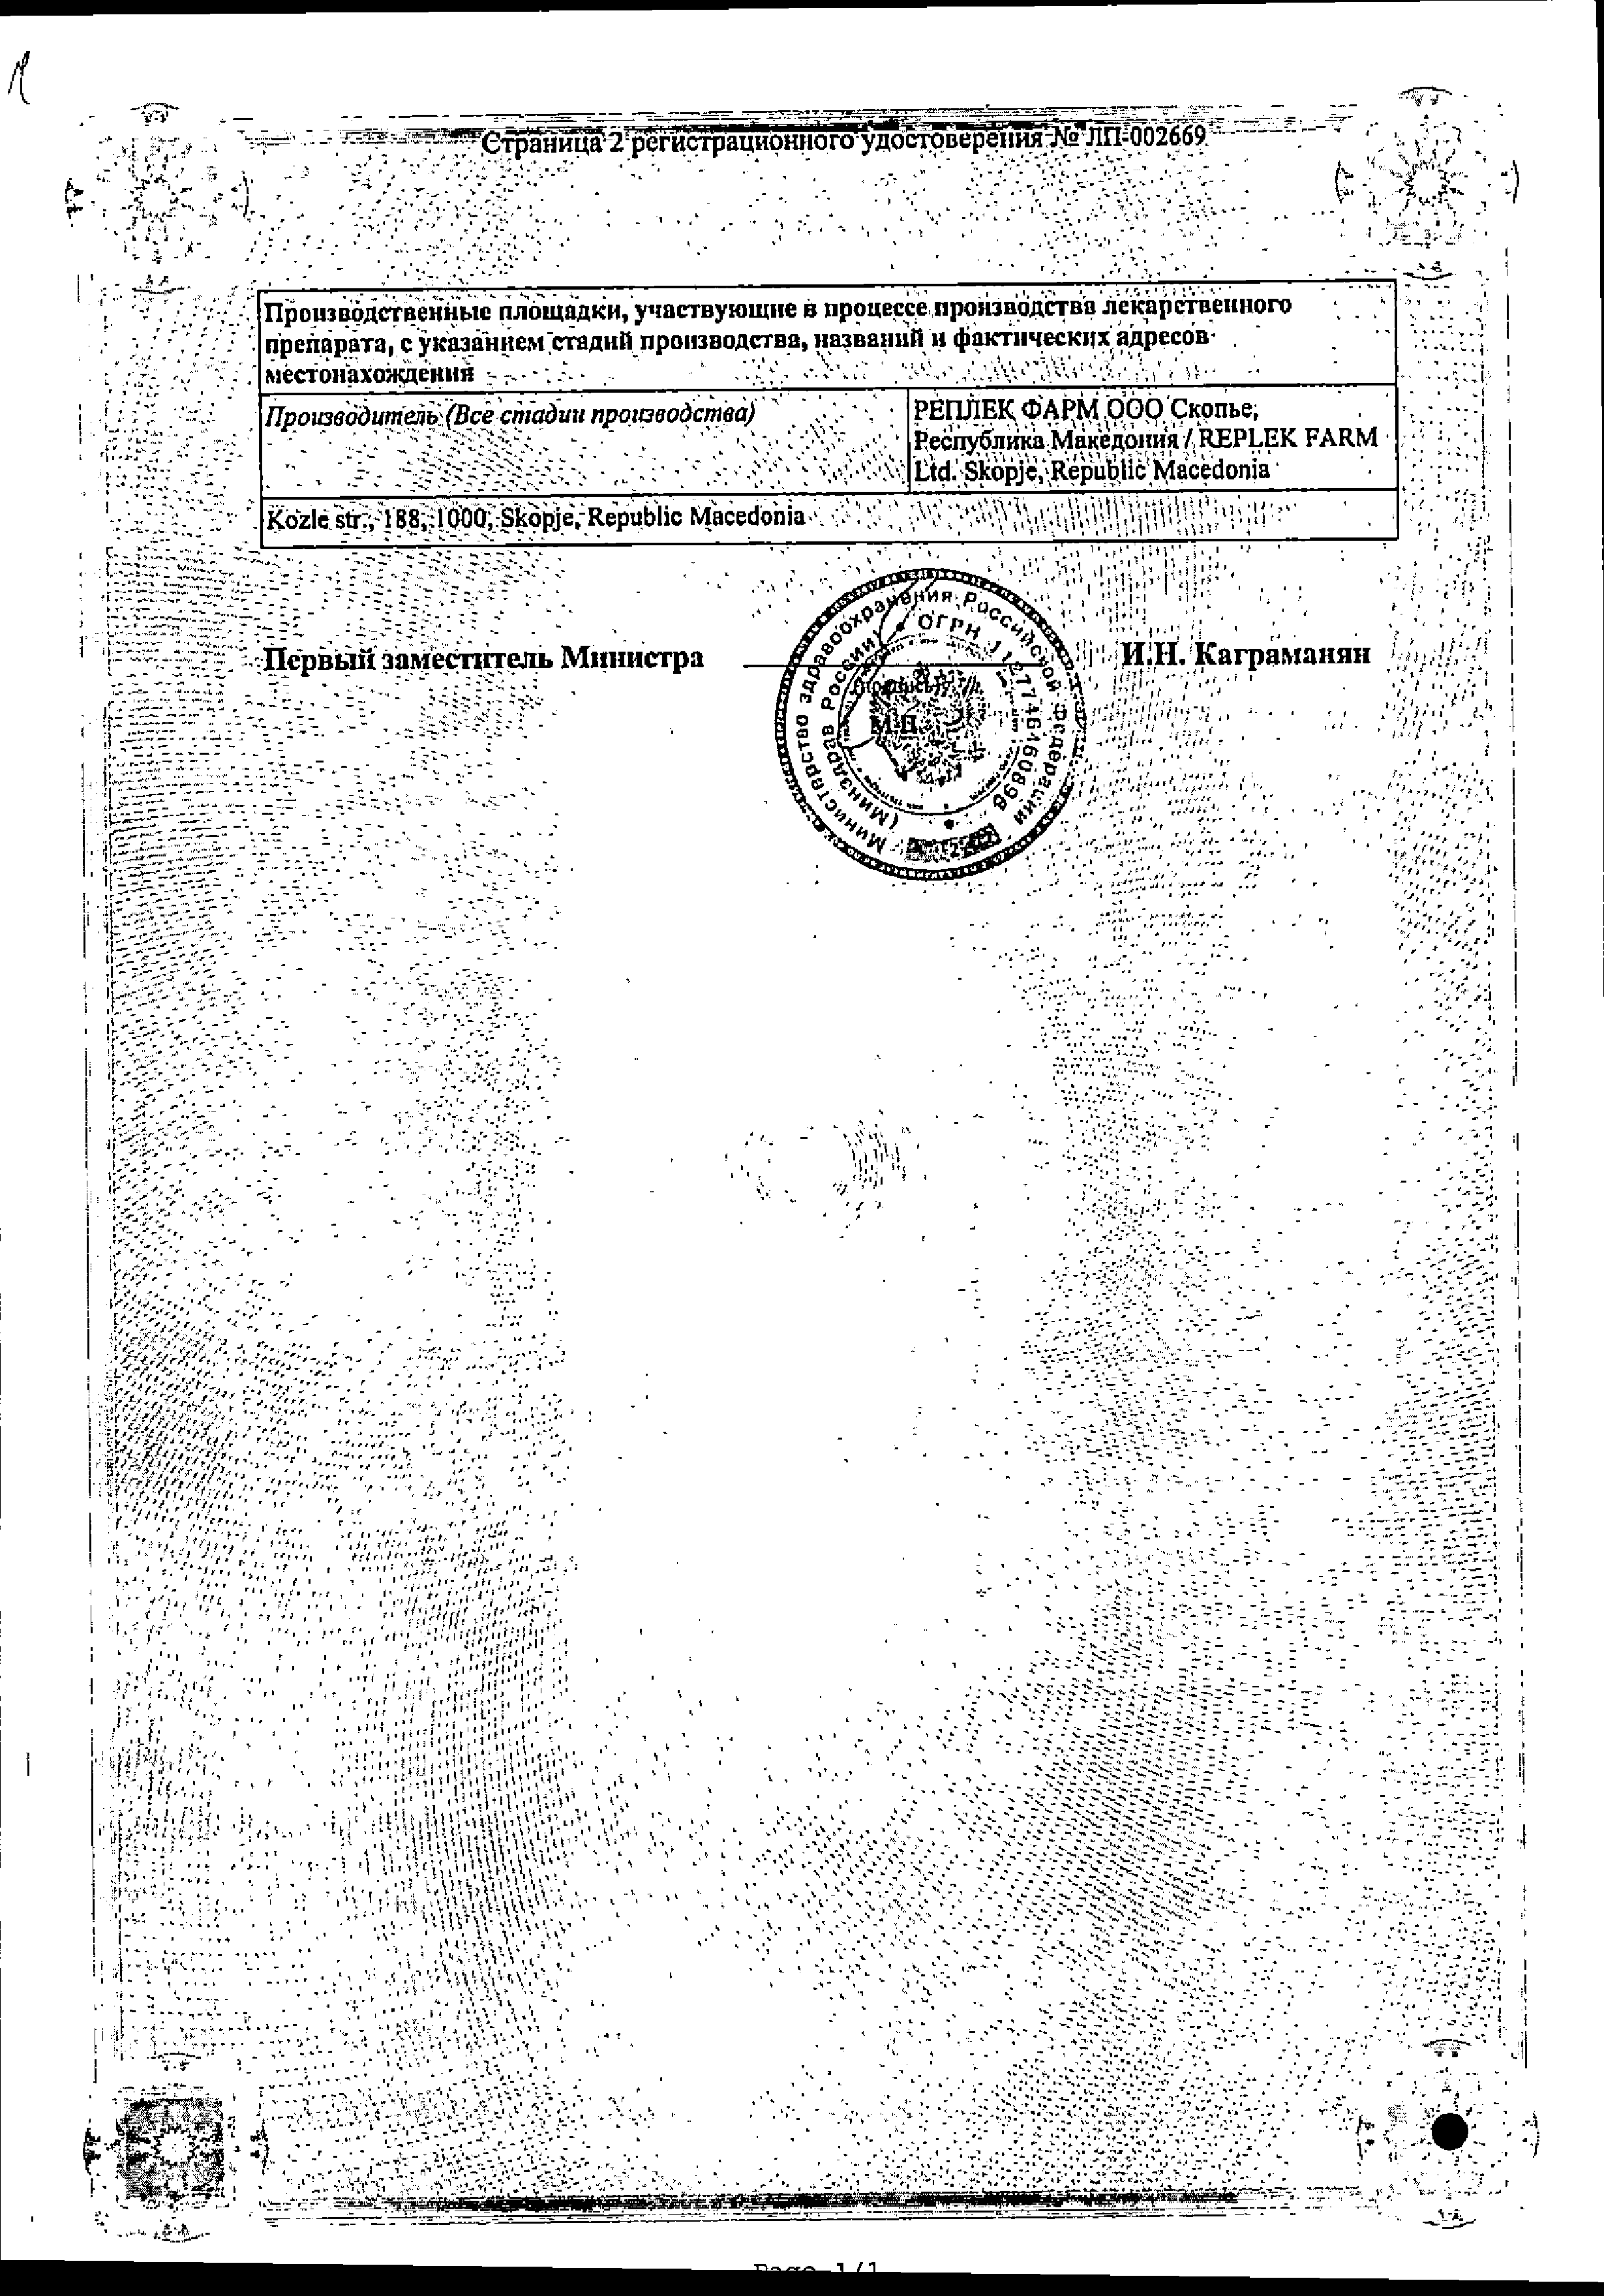 Оралсепт сертификат